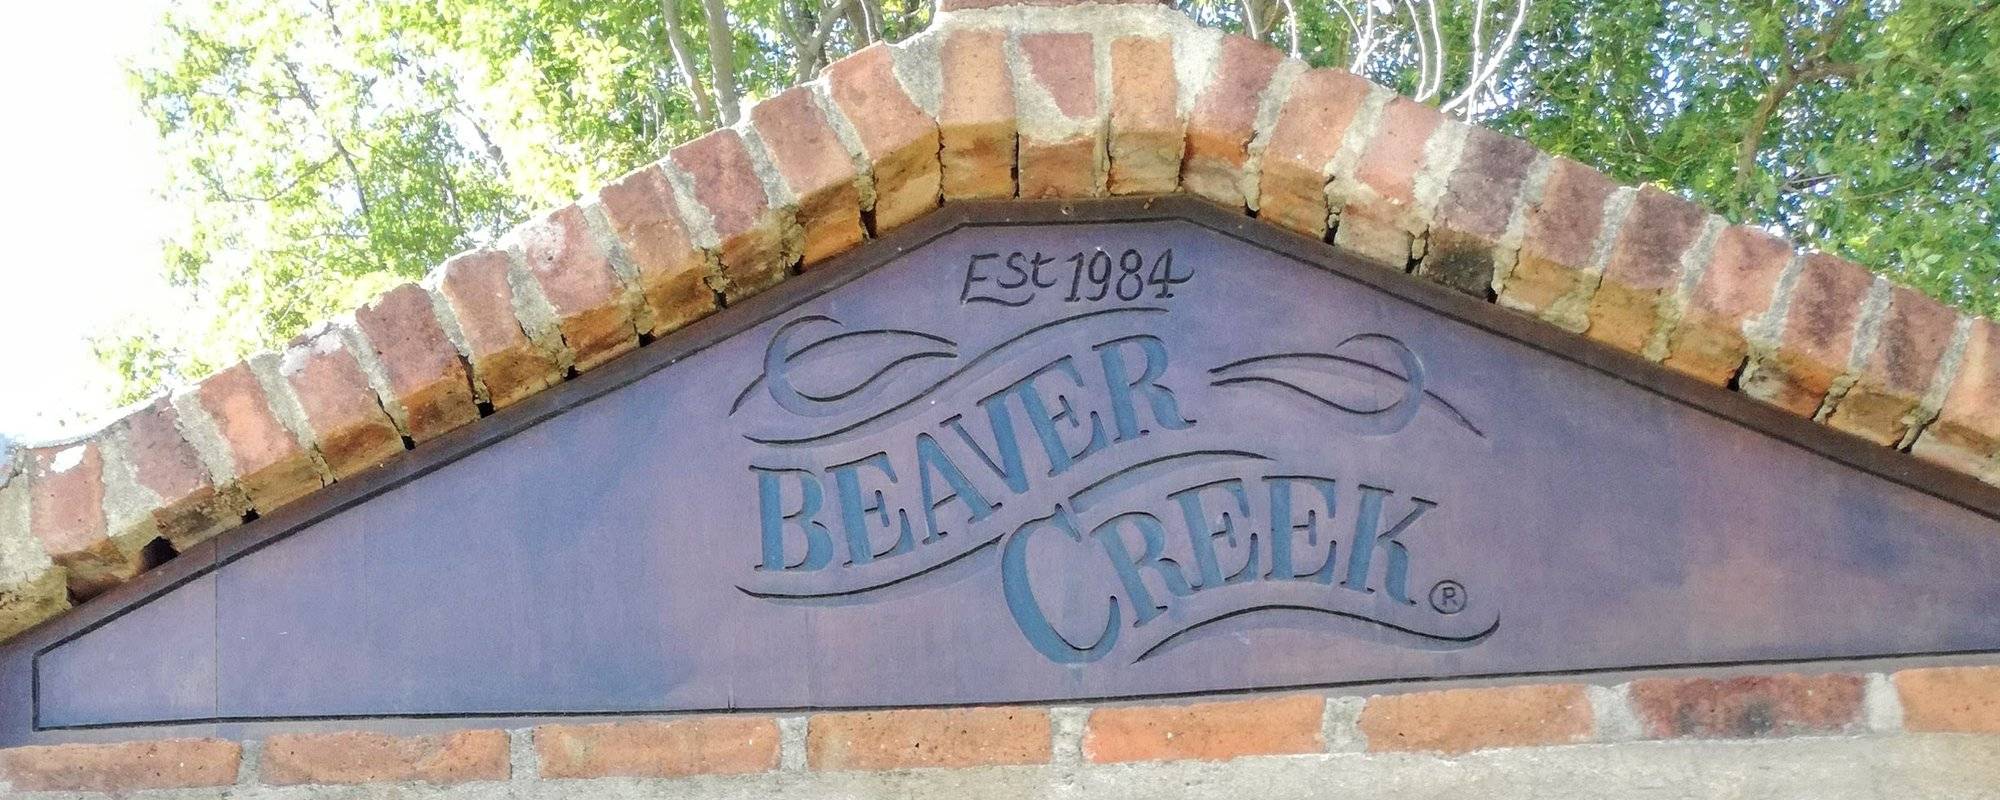 Wednesday Walk - Walking the Beaver Creek Coffee Estate